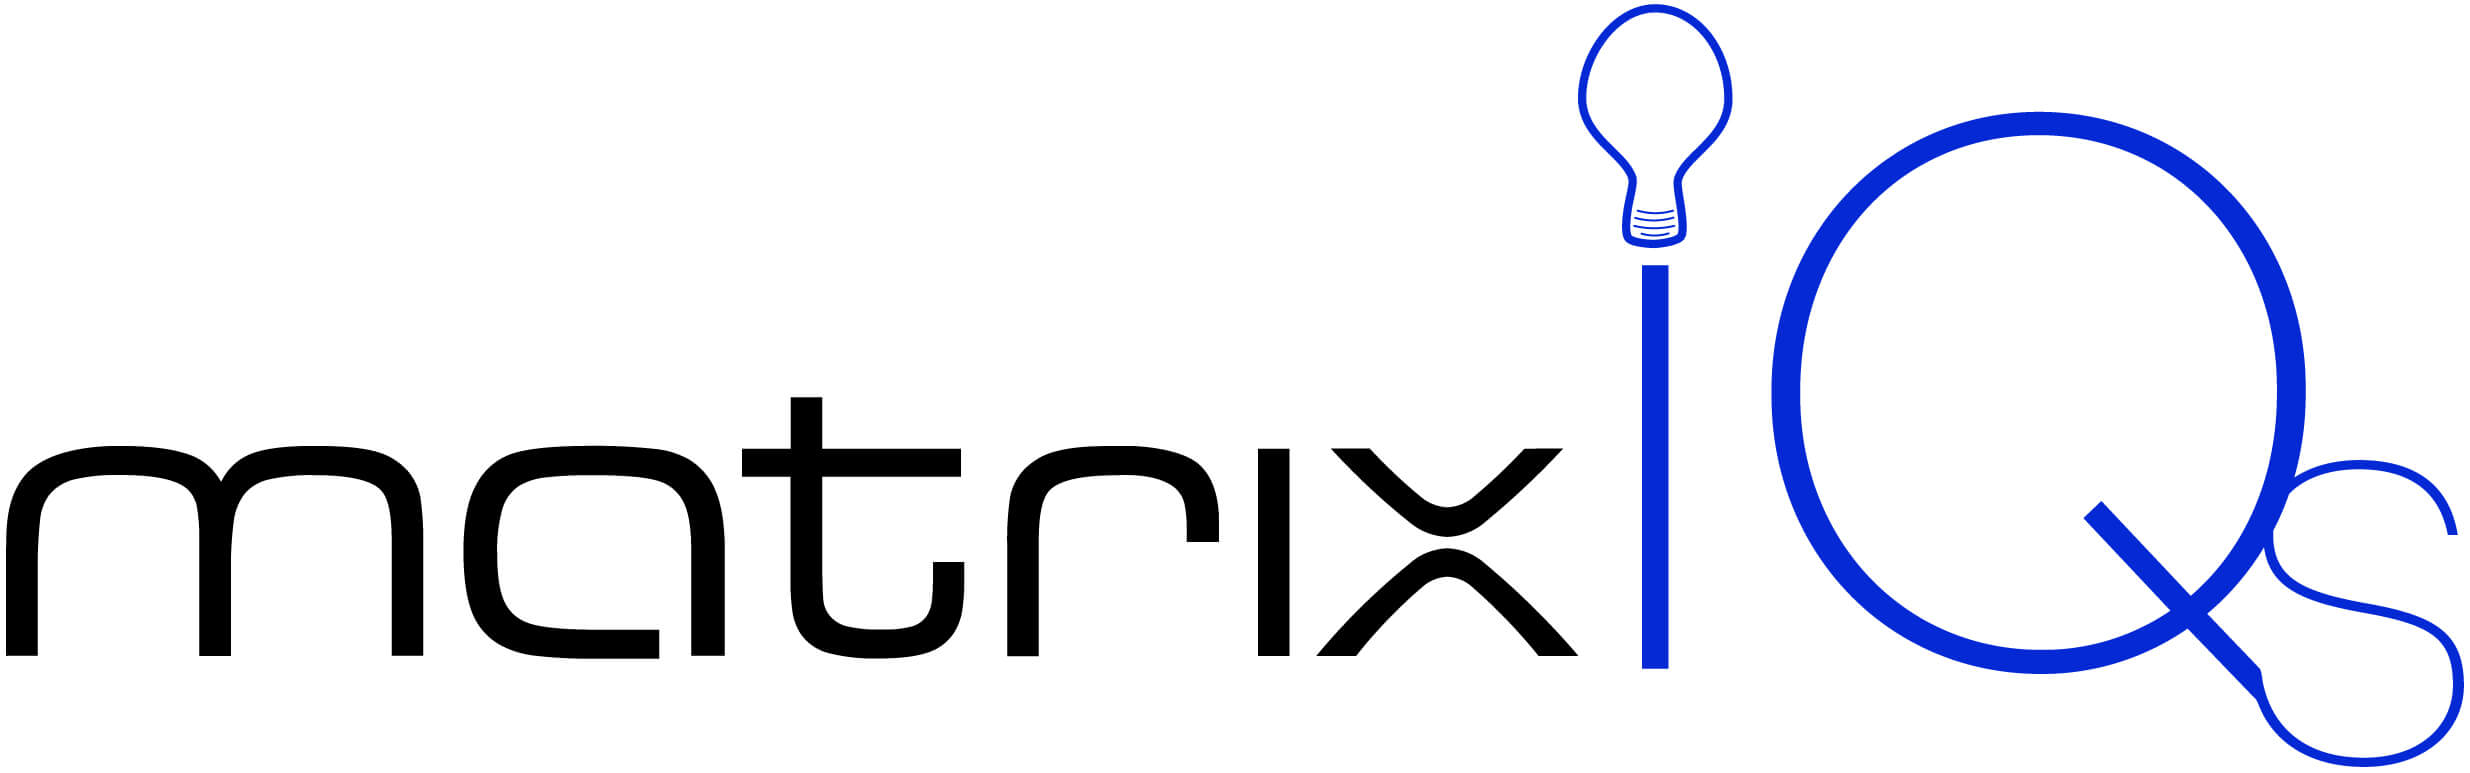 logo matrix iqs.jpg